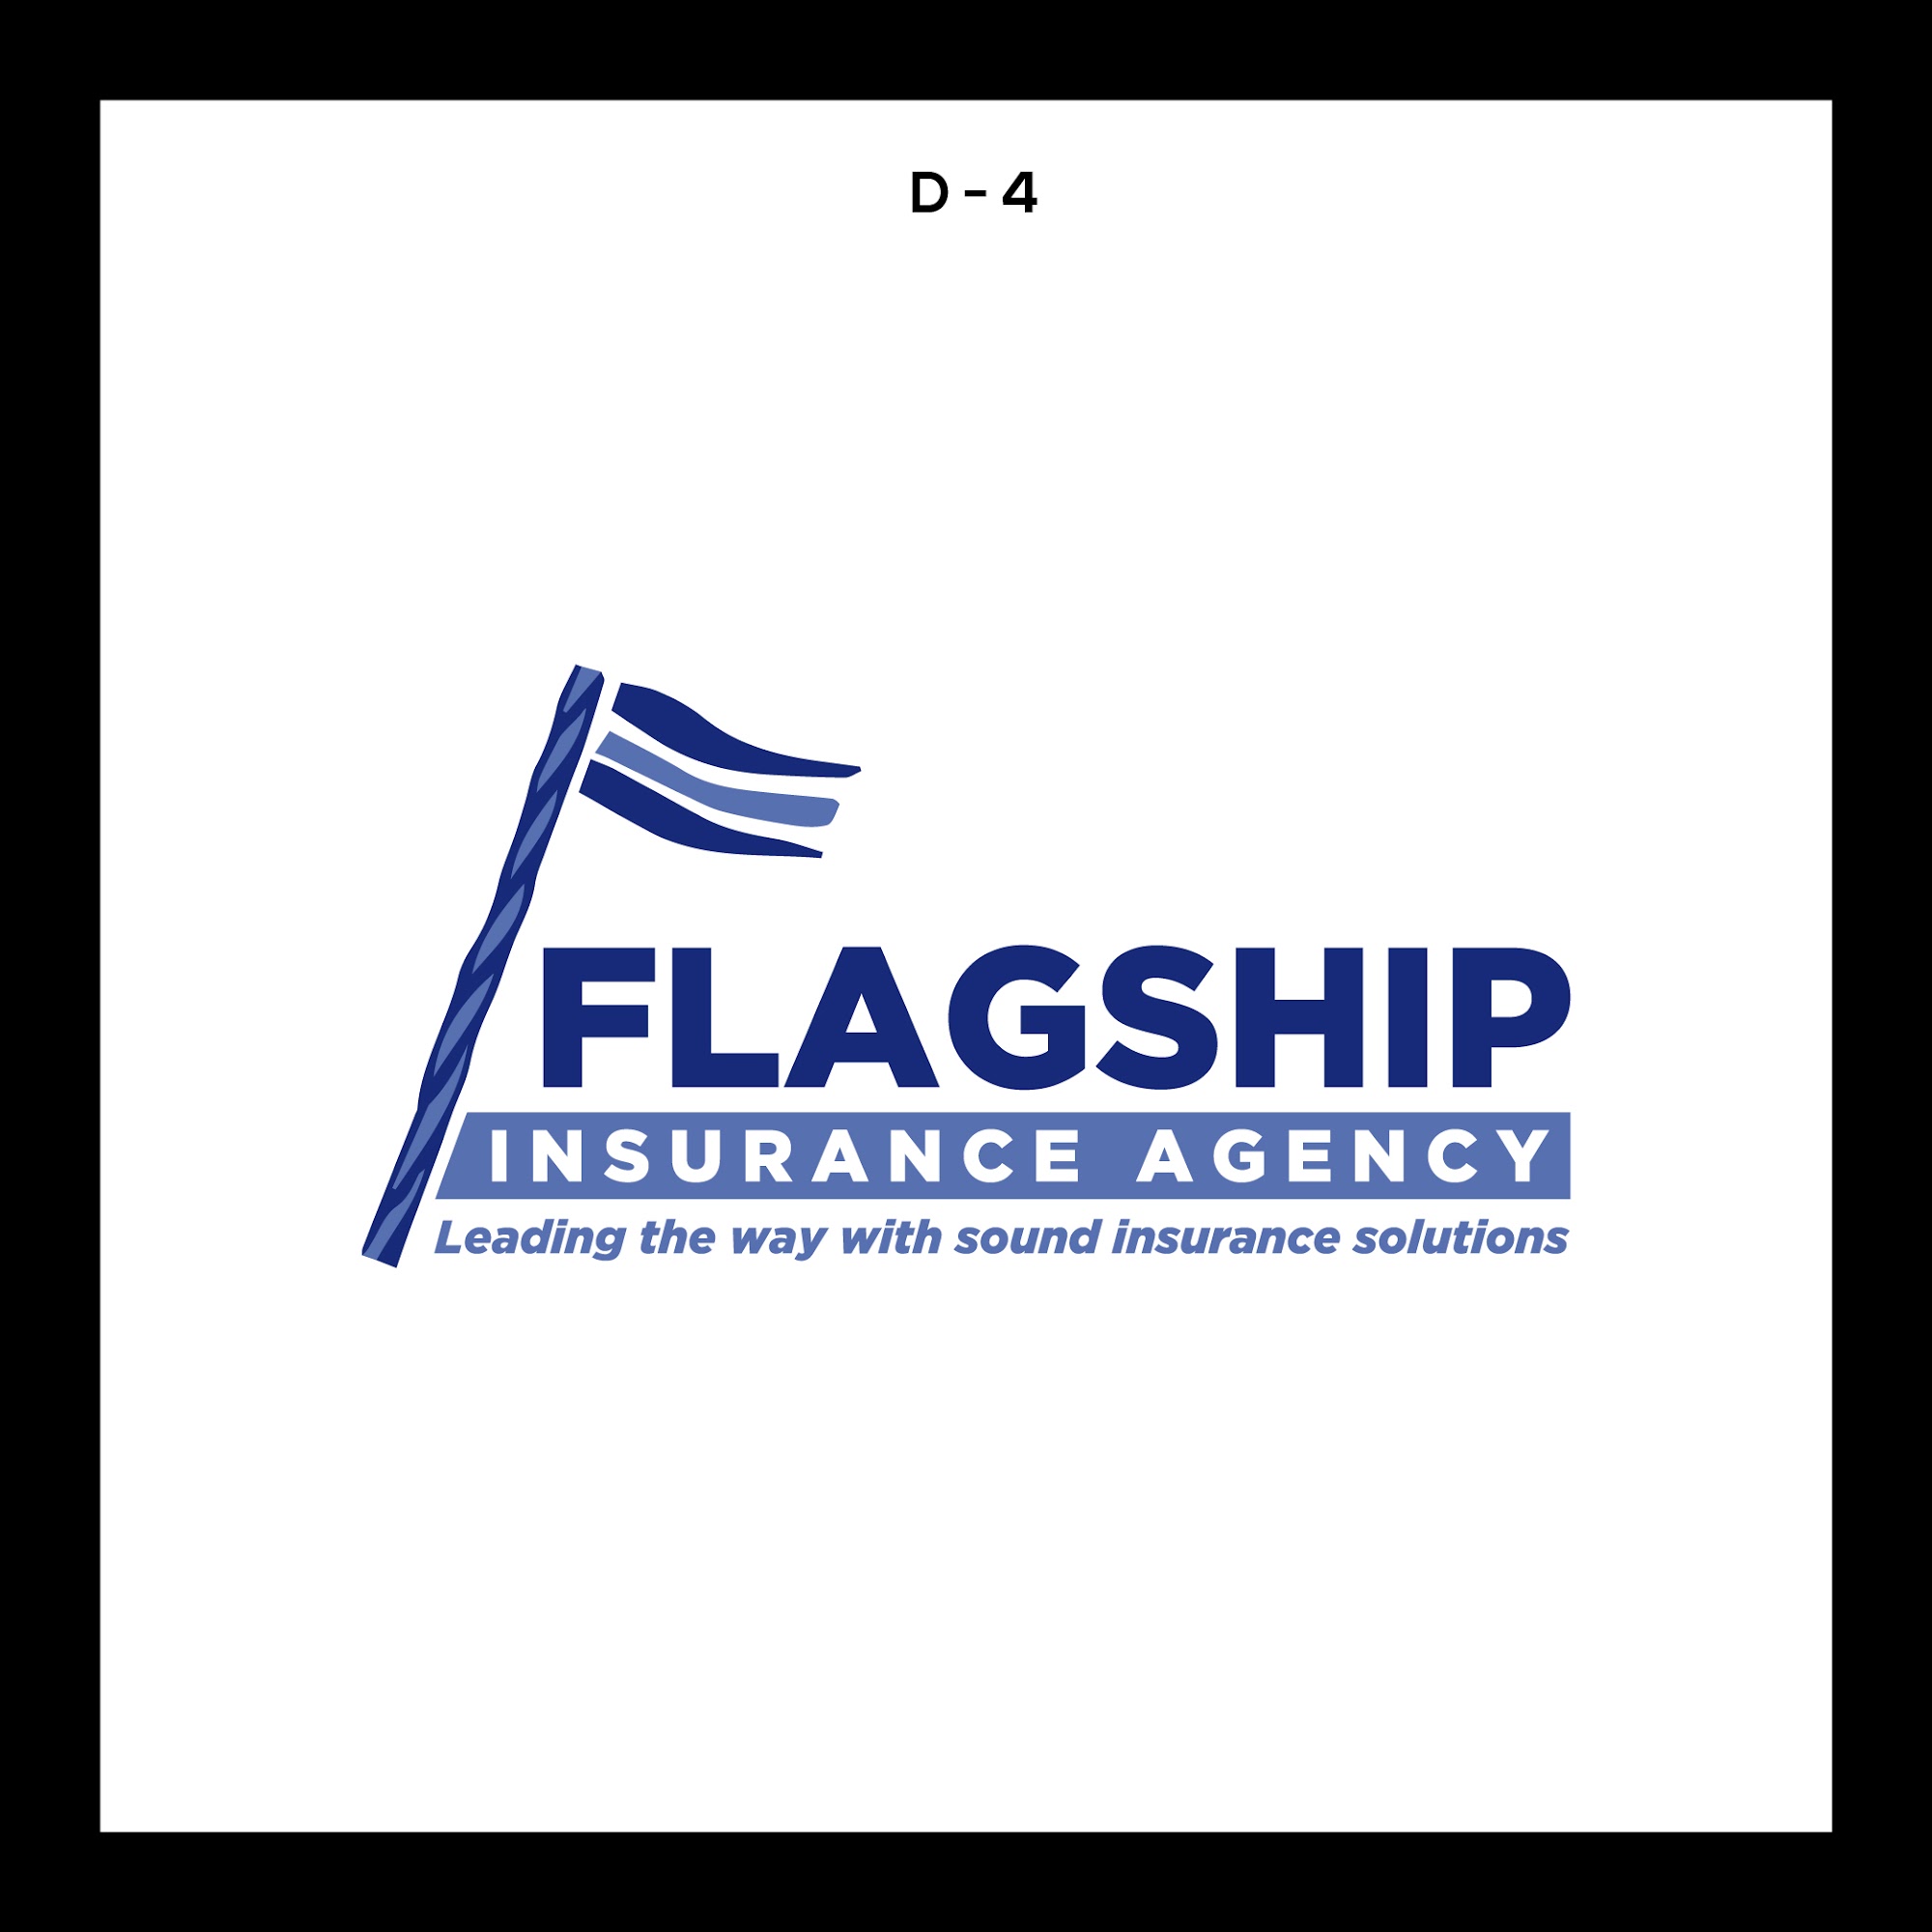 Flagship Insurance